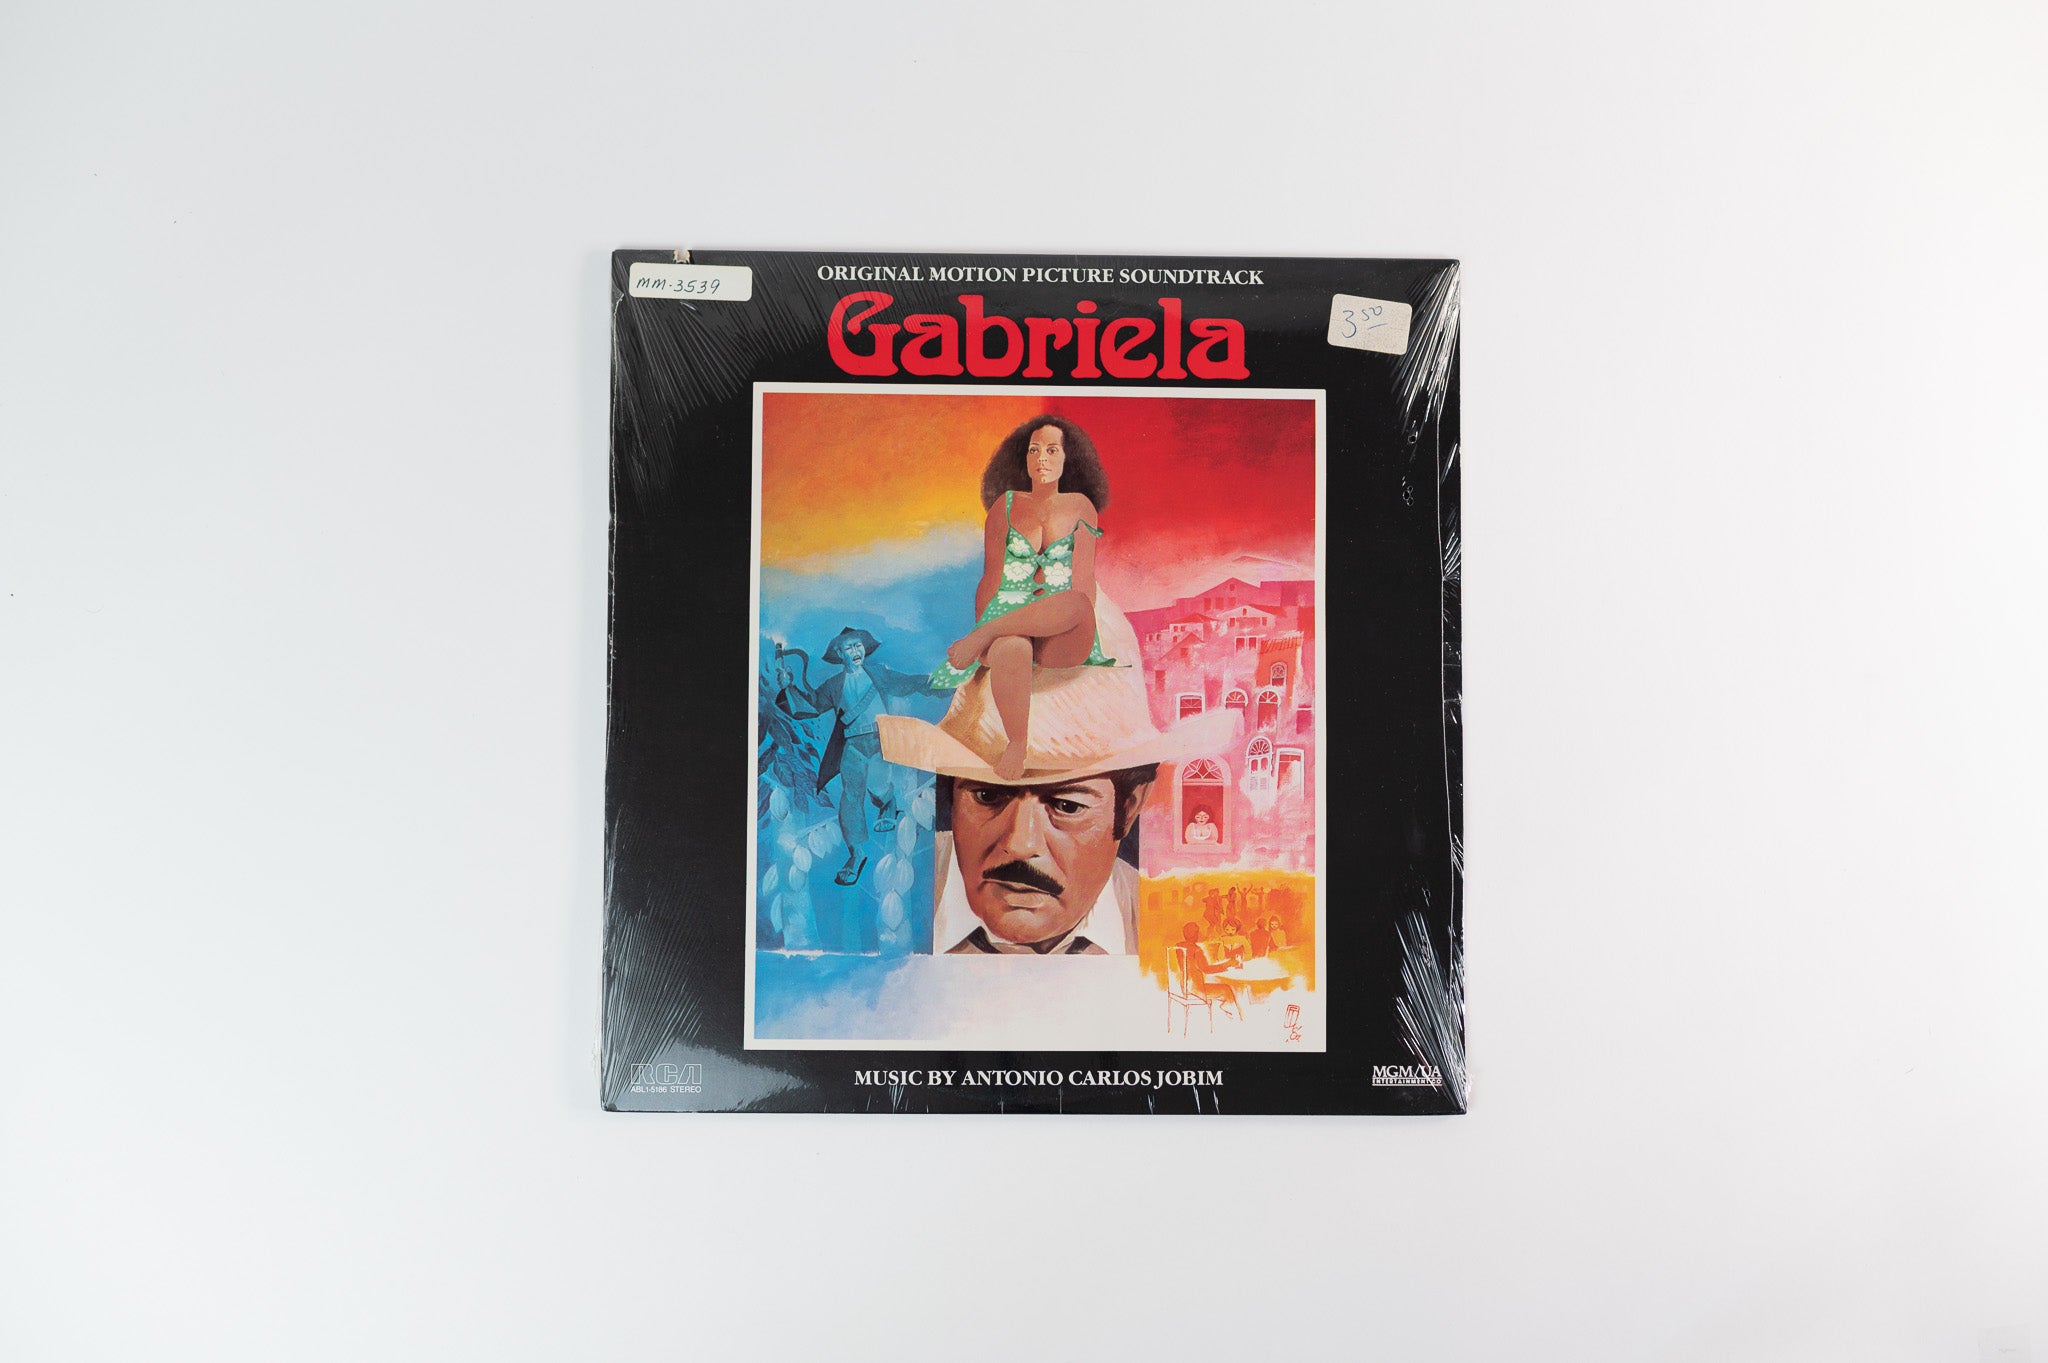 Antonio Carlos Jobim - Gabriela (Original Soundtrack) on RCA Sealed